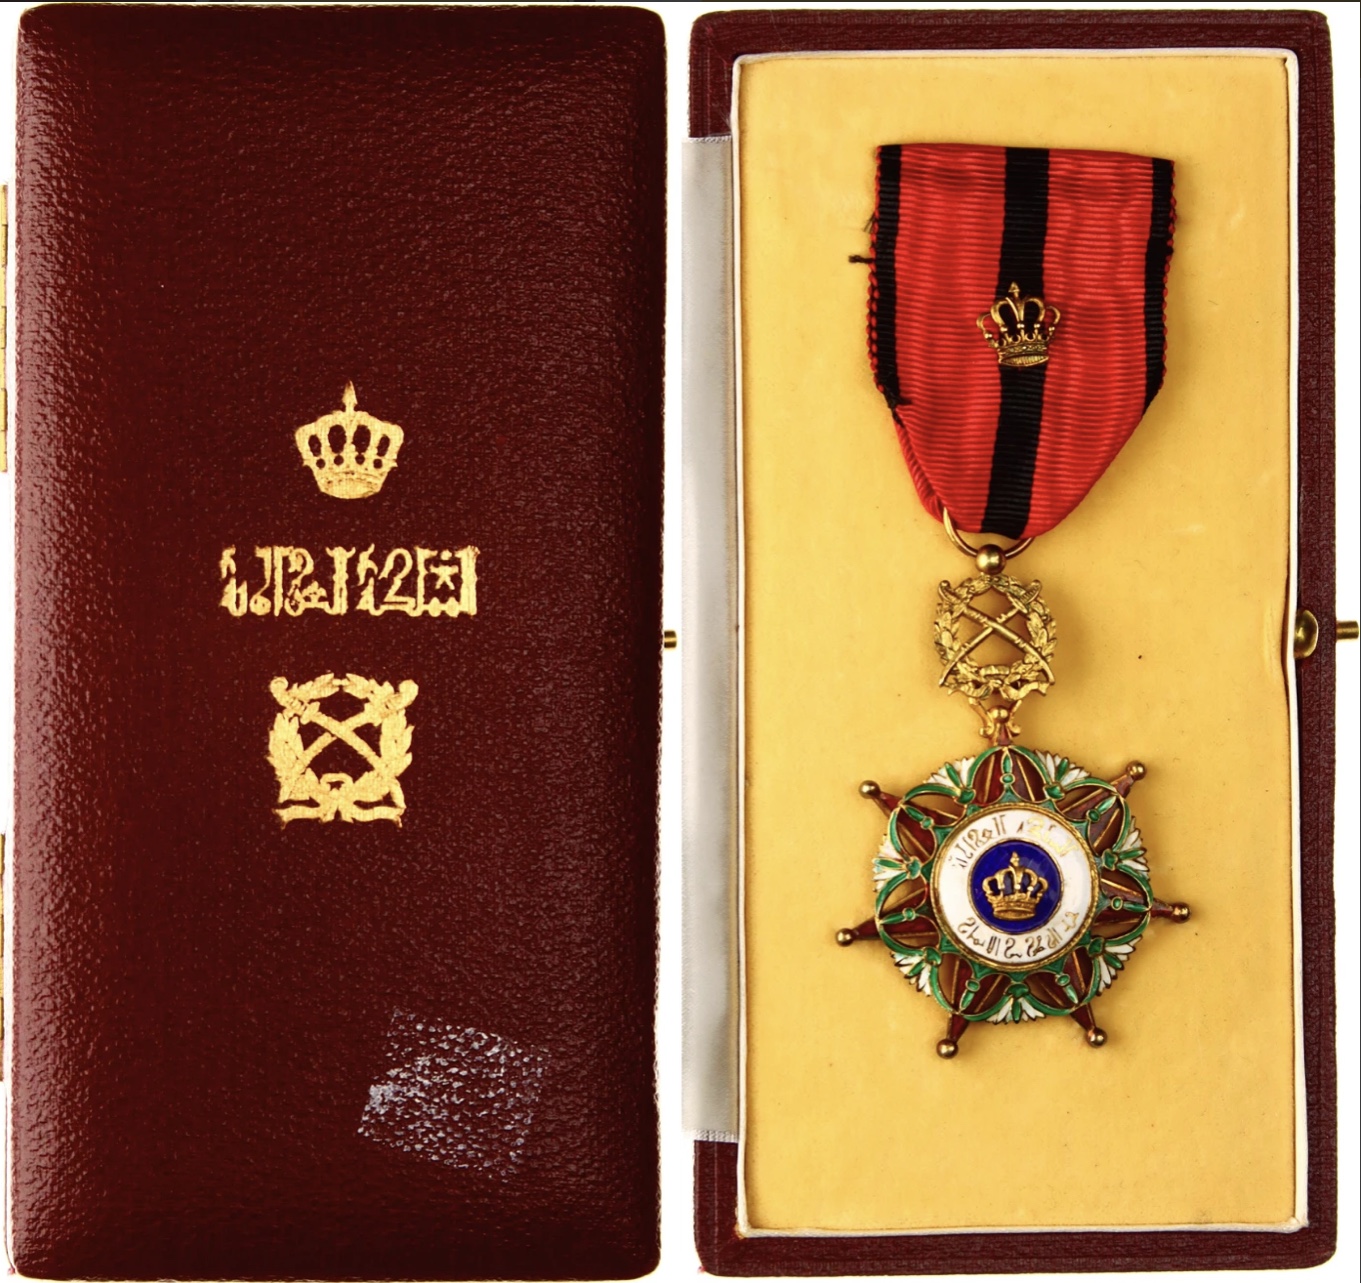 Kingdom of Iraq Order of Two Rivers Chest Badge Medal Wisam al-Imtiaz-i-Rafidain